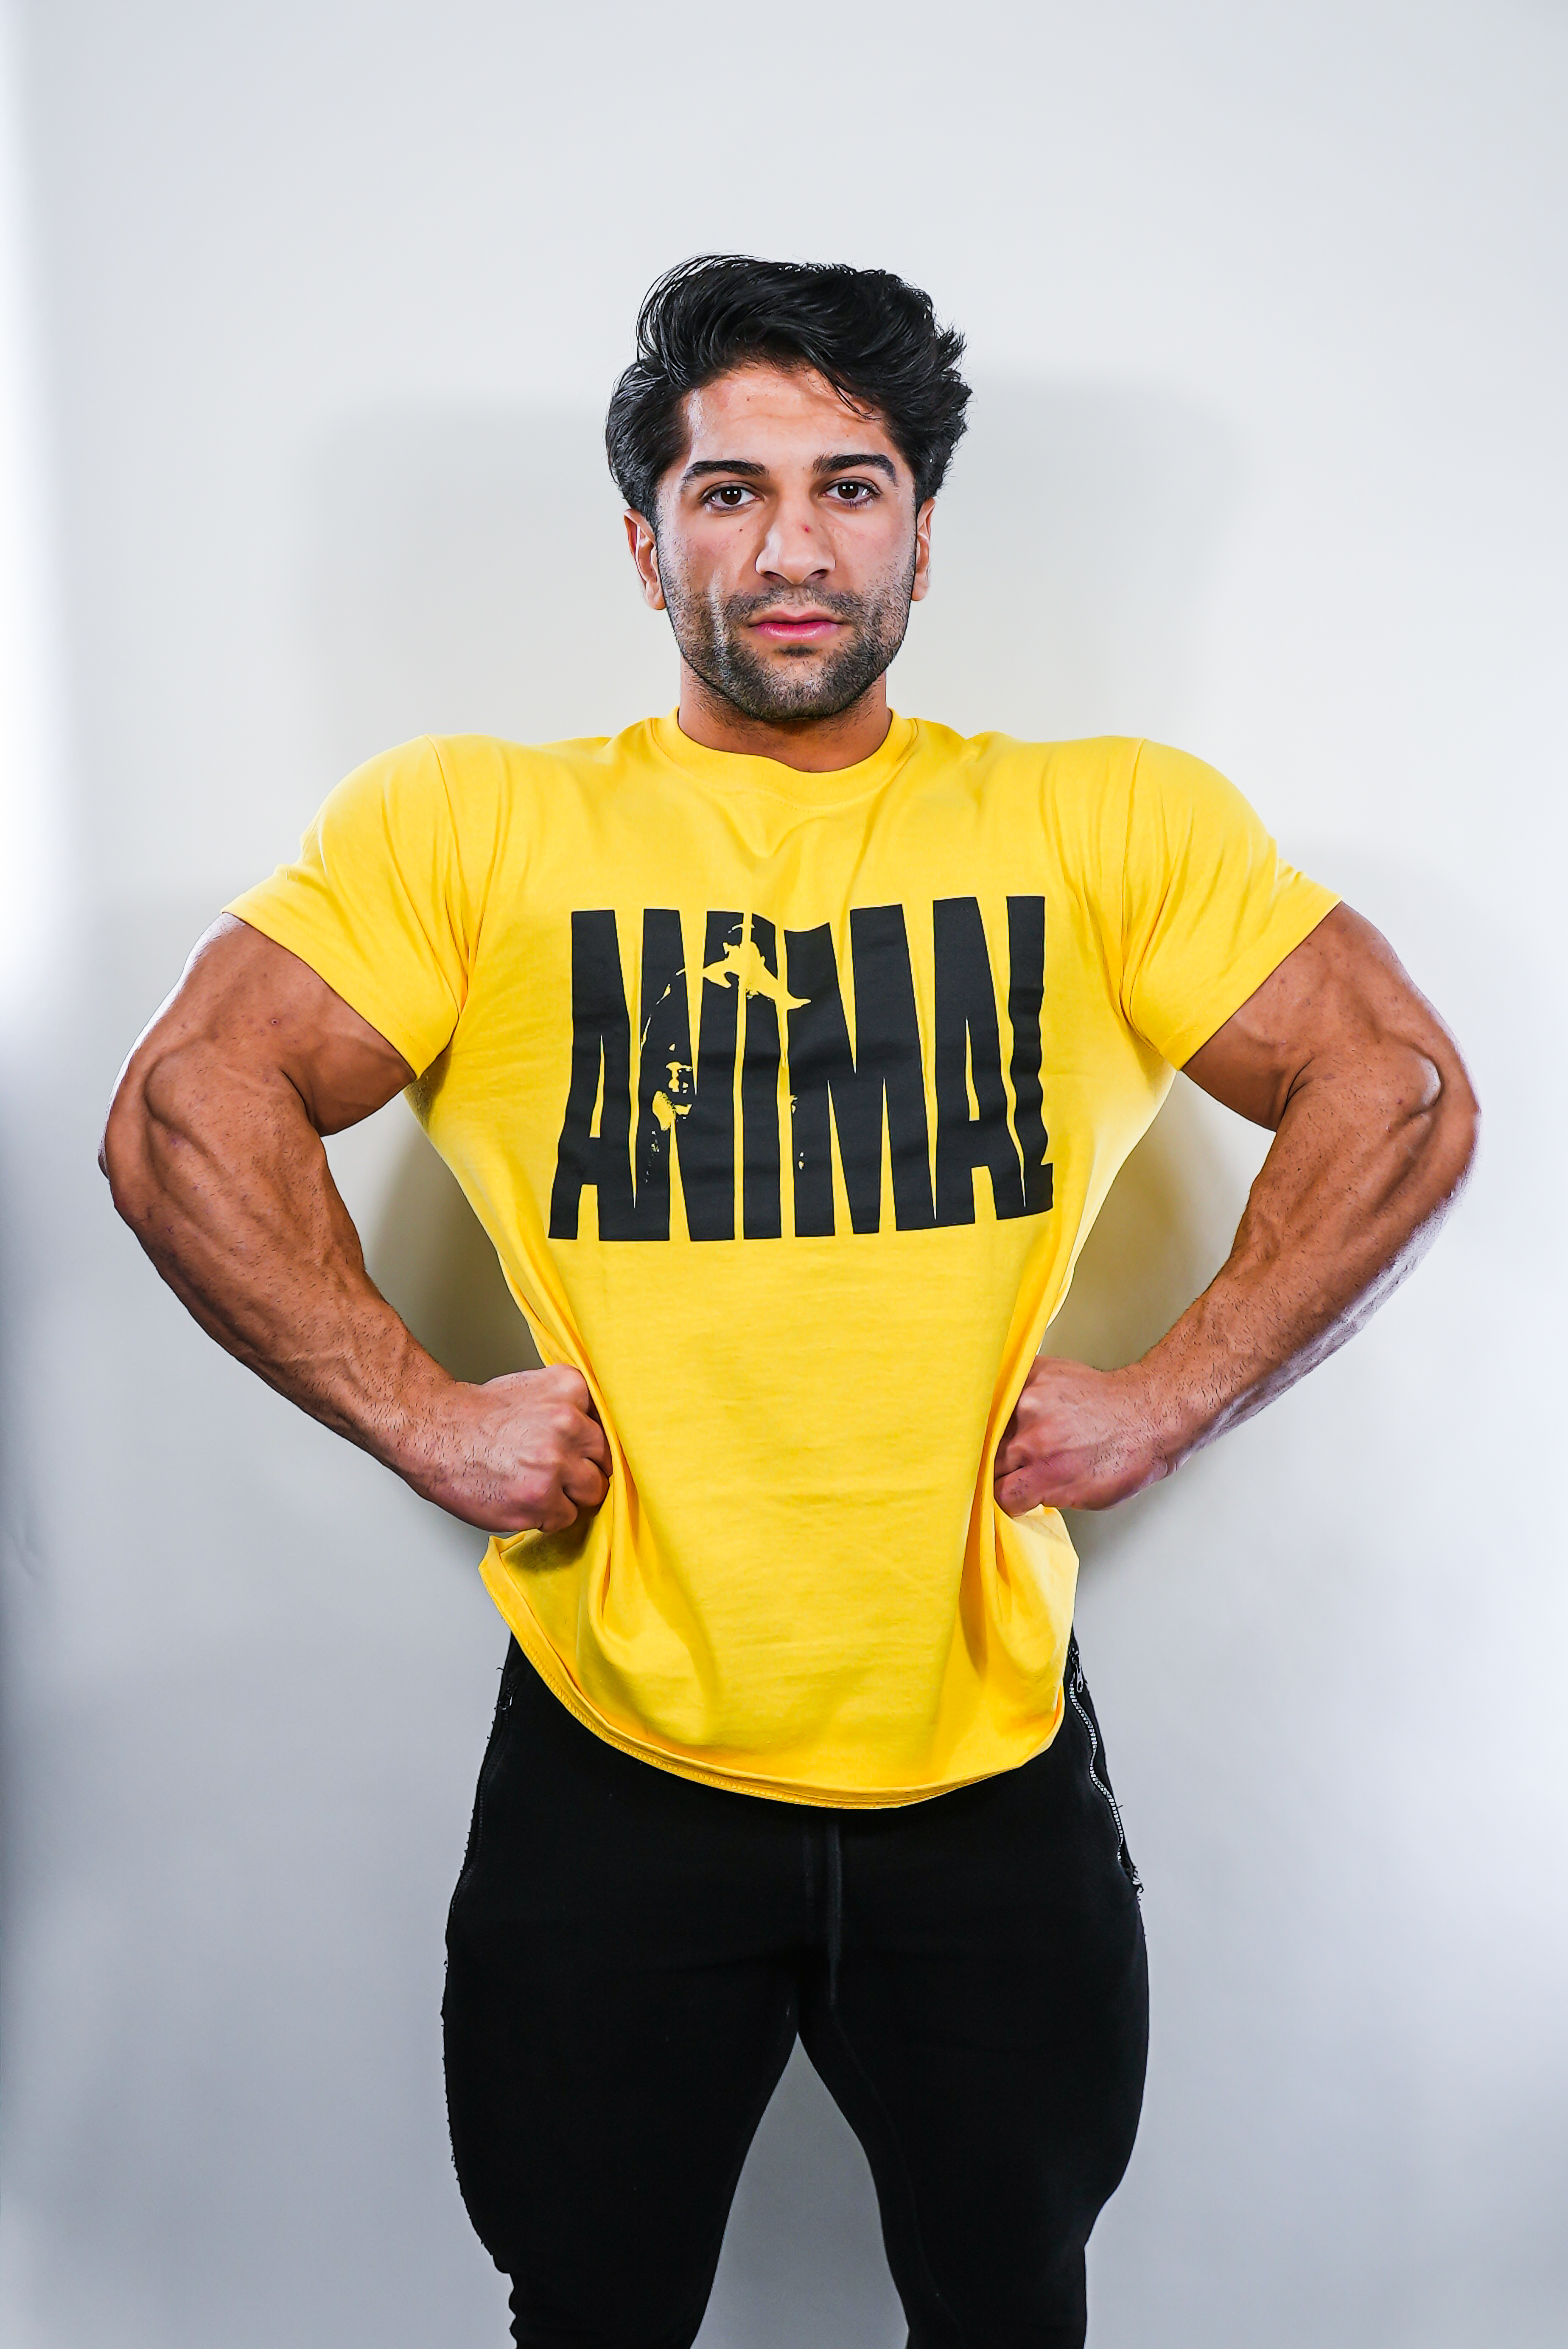 Animal Iconic T-Shirt Yellow